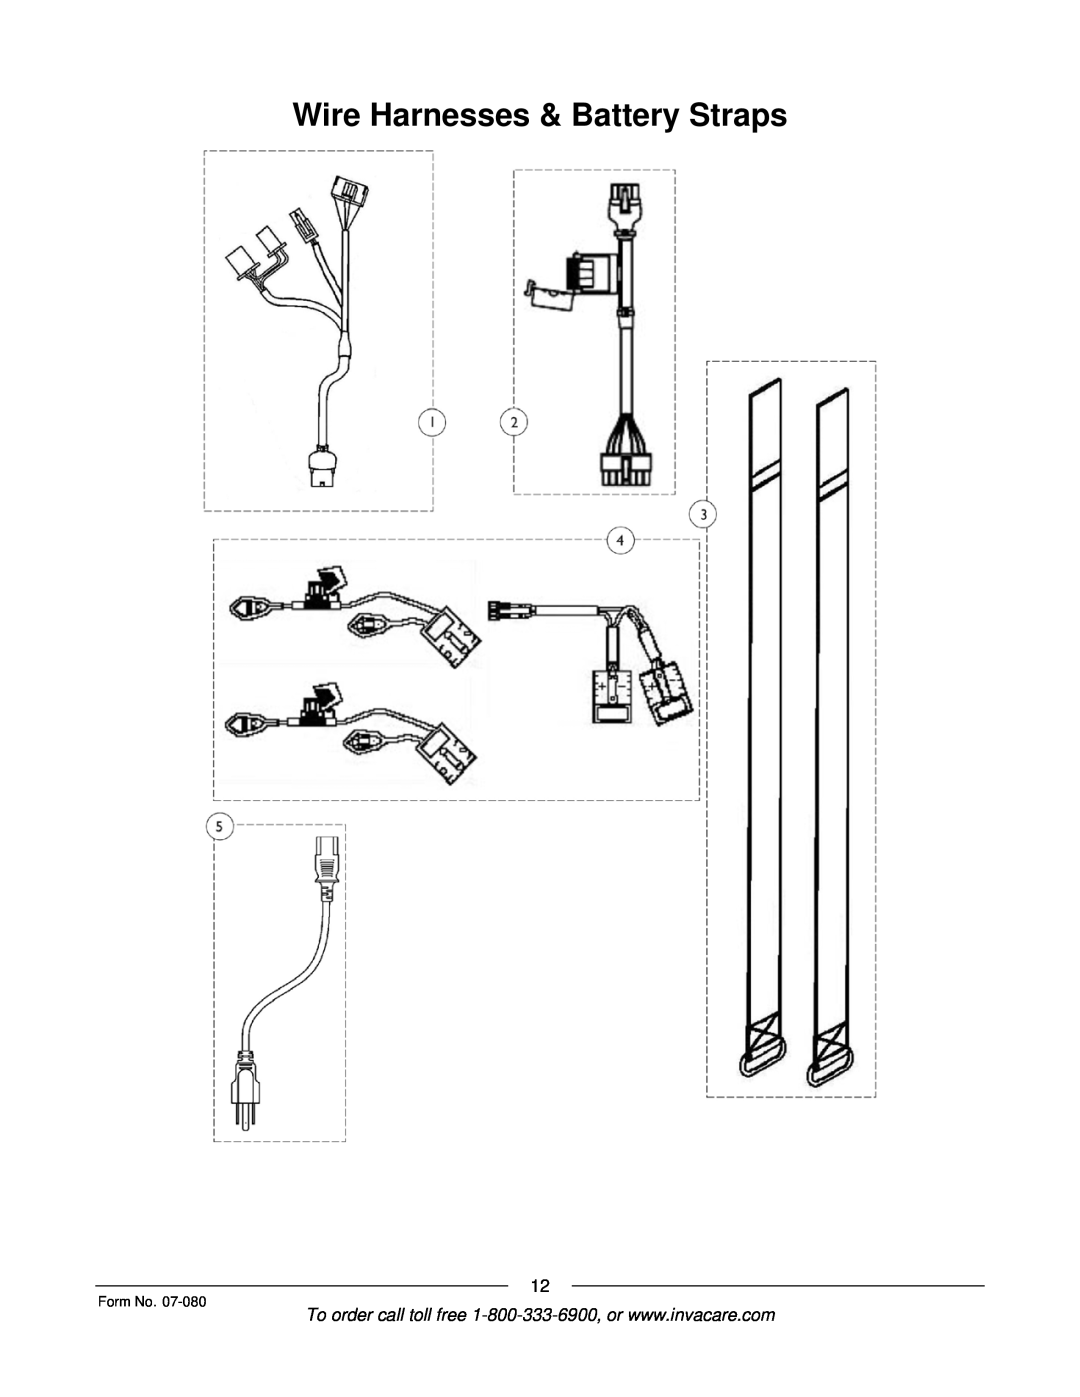 Invacare Lynx L-3X manual Wire Harnesses & Battery Straps, Form No 